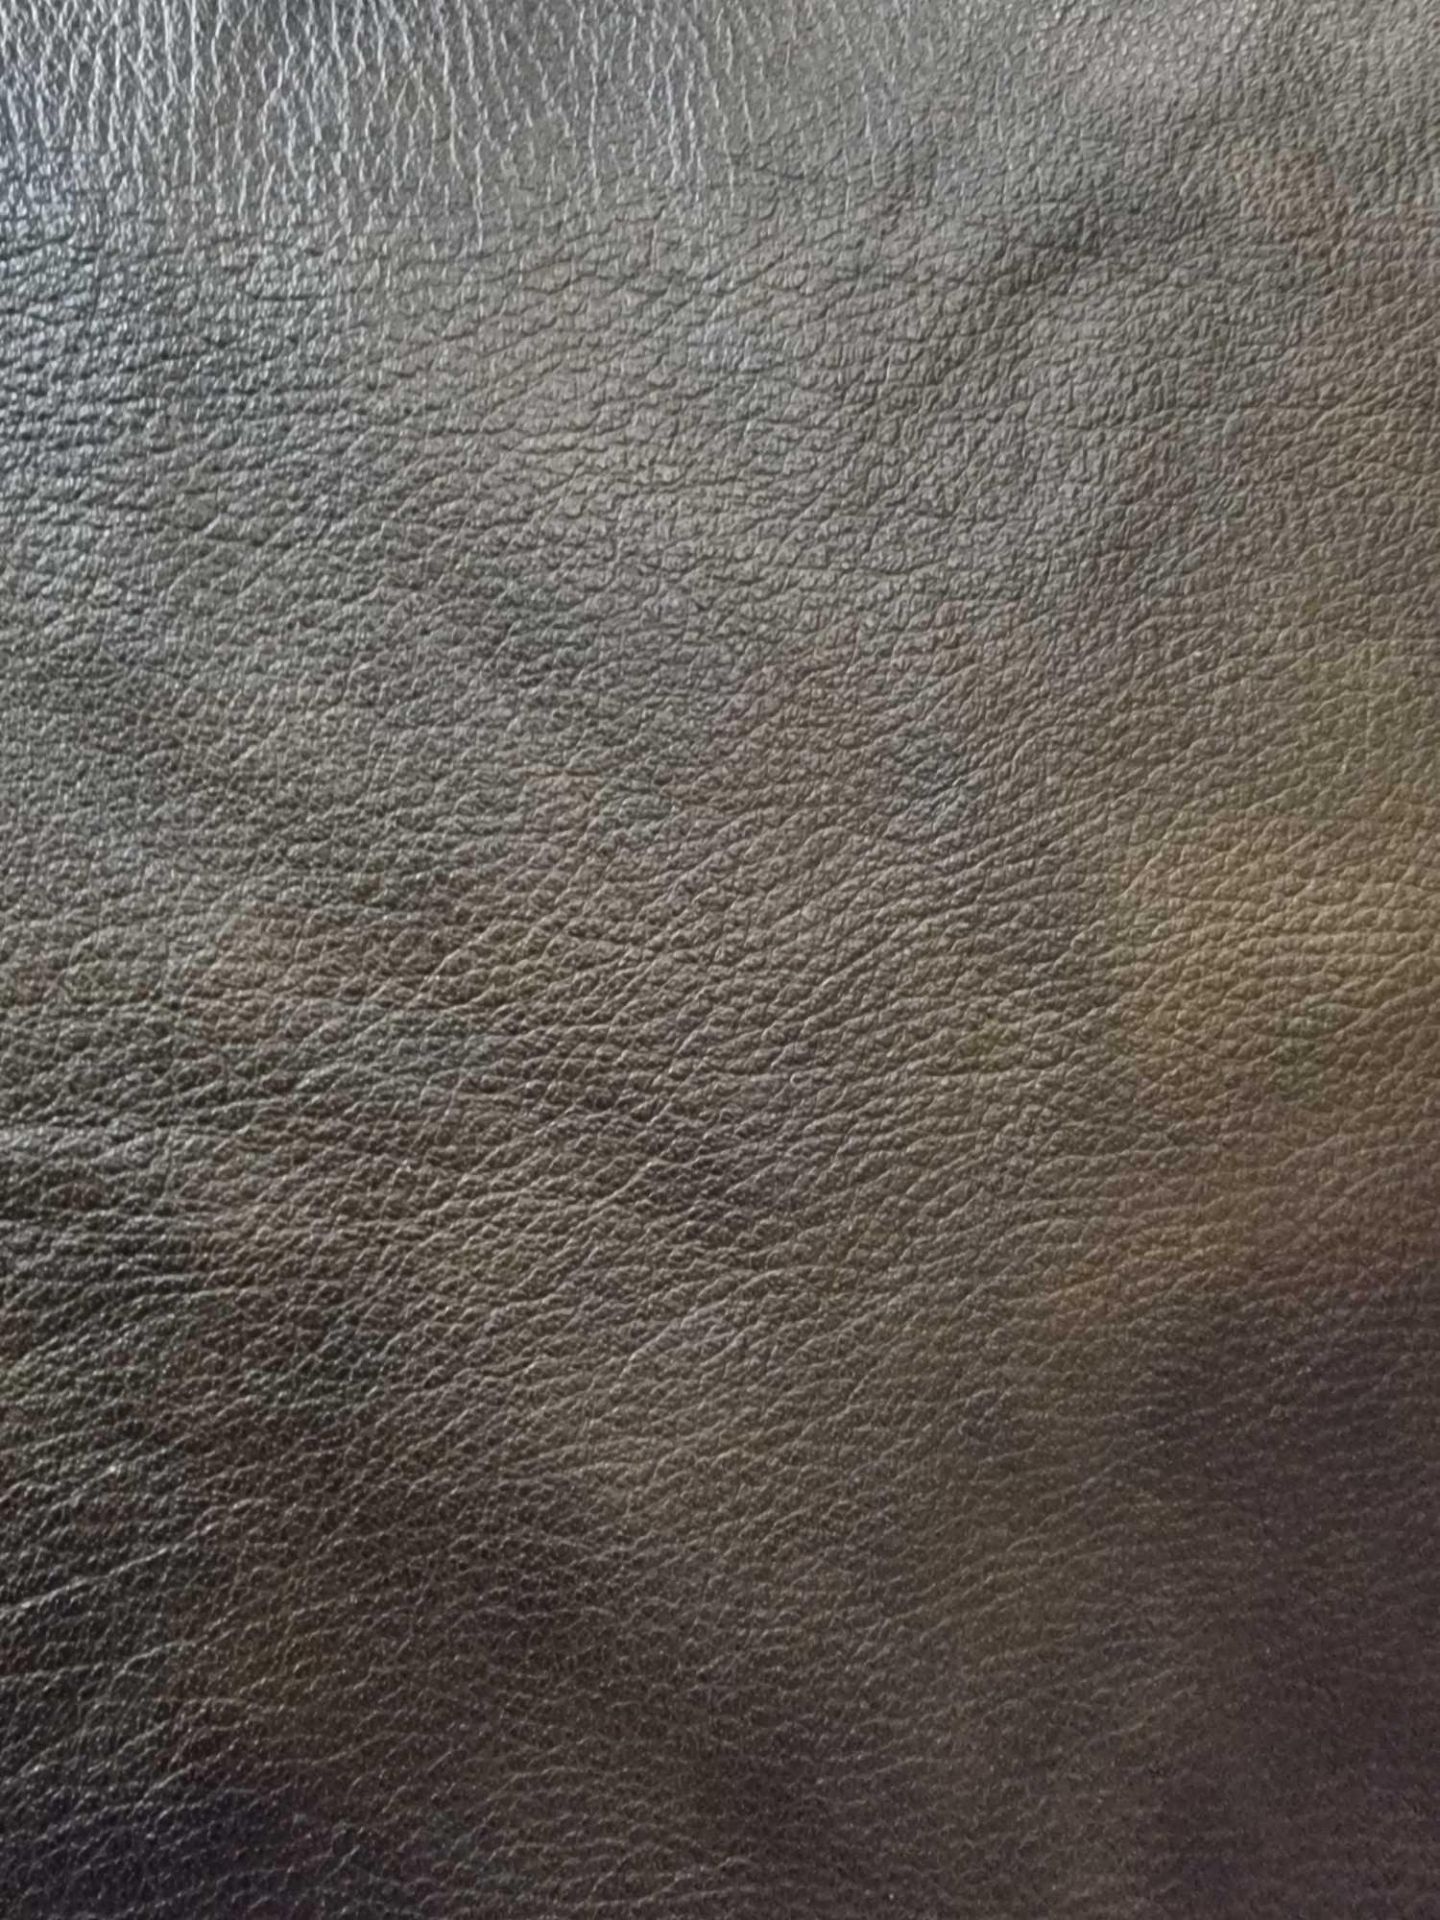 Chestnut Leather Hide approximately 3.42mÂ² 1.9 x 1.8cm